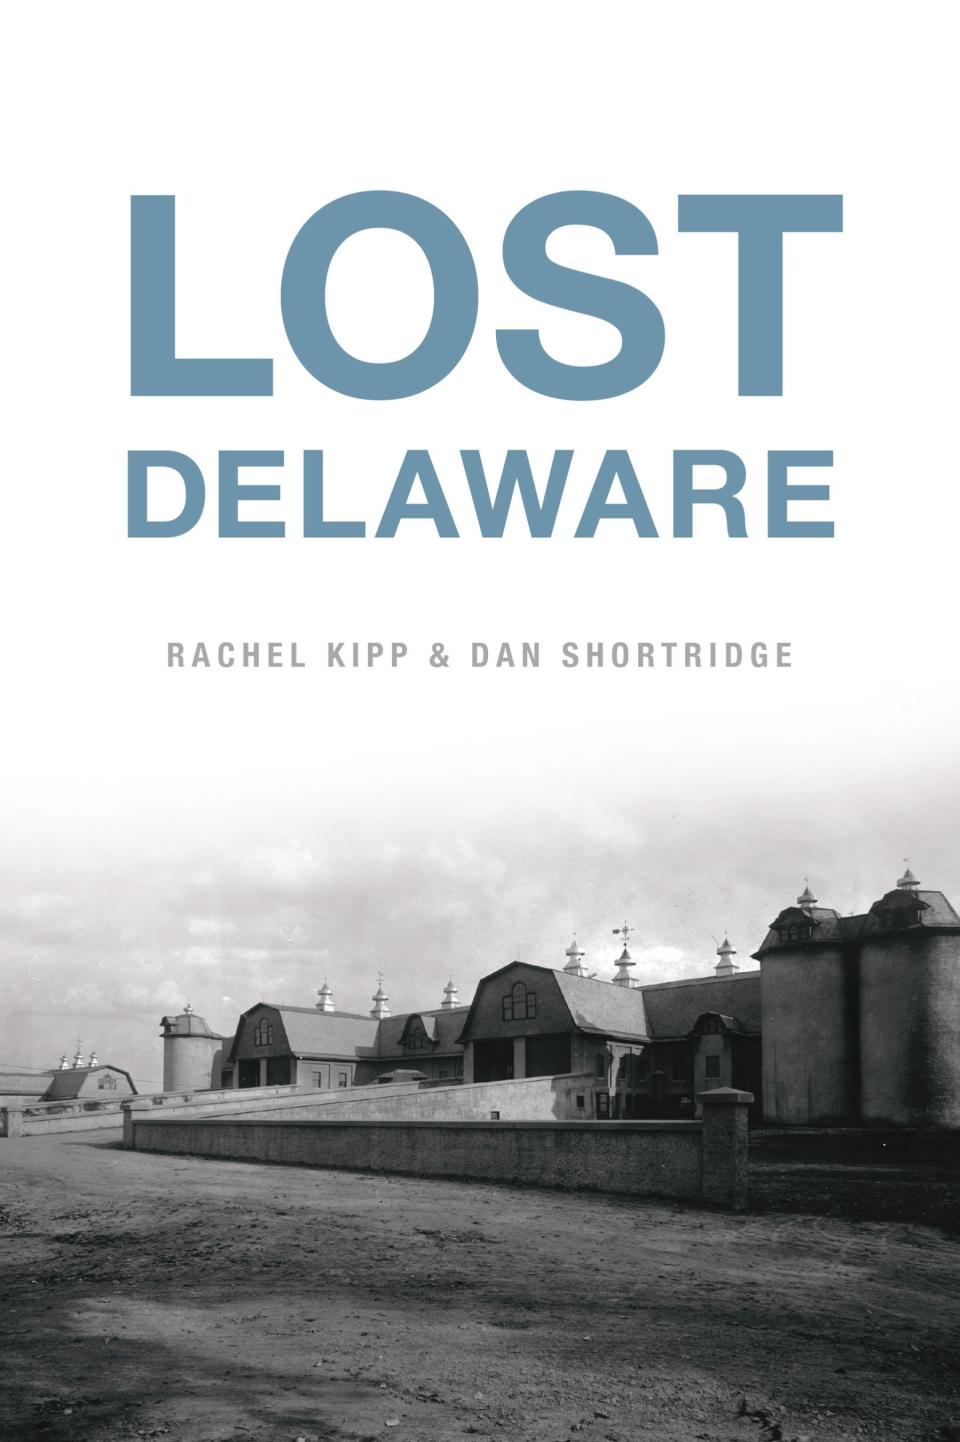 "Lost Delaware," by Rachel Kipp and Dan Shortridge, was released earlier this month.